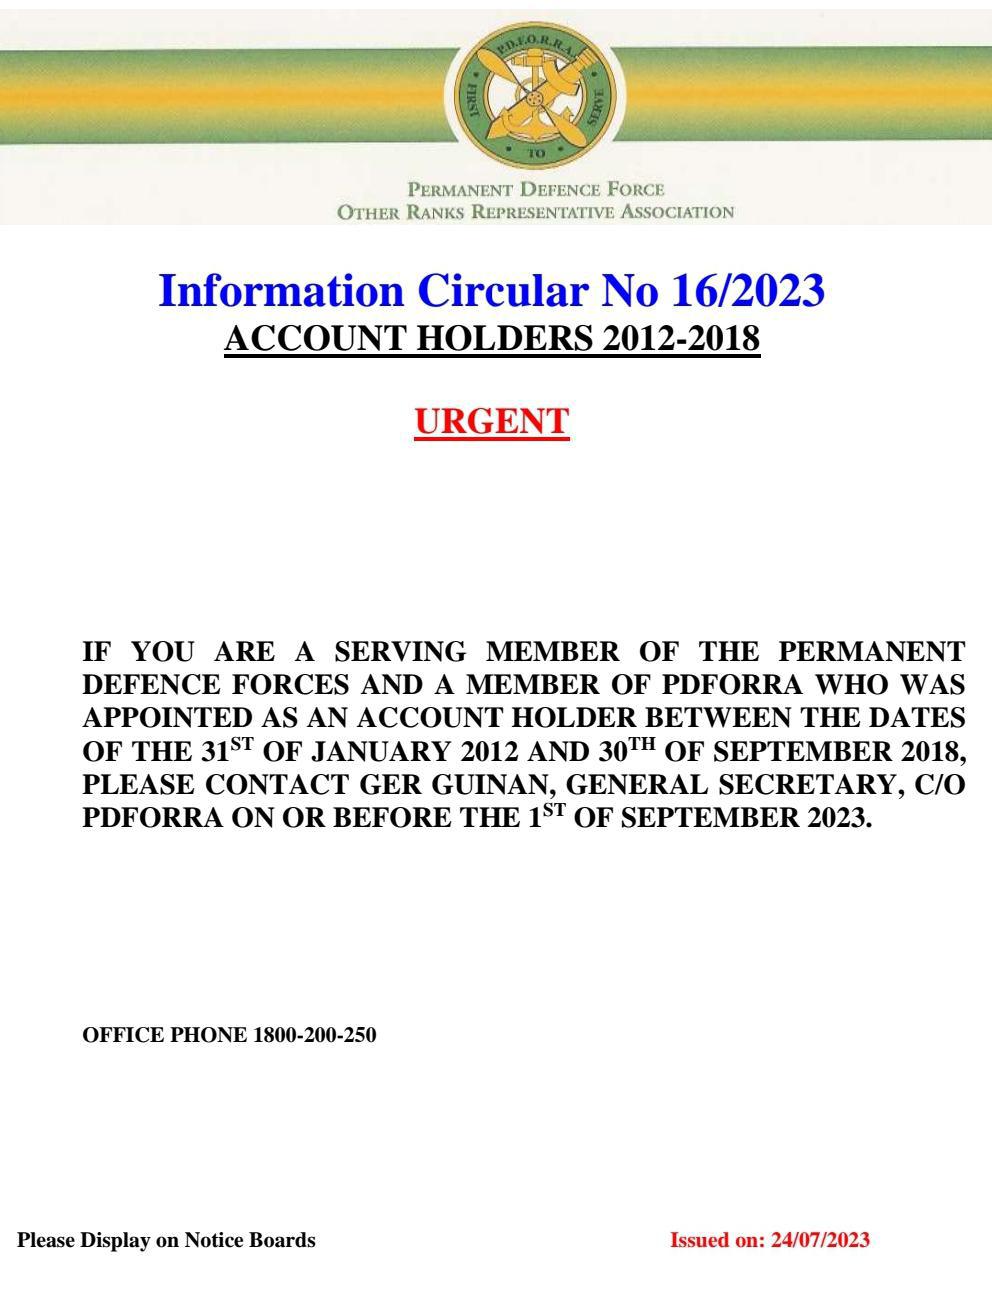 Information Circular No 16 of 23 - Account Holders